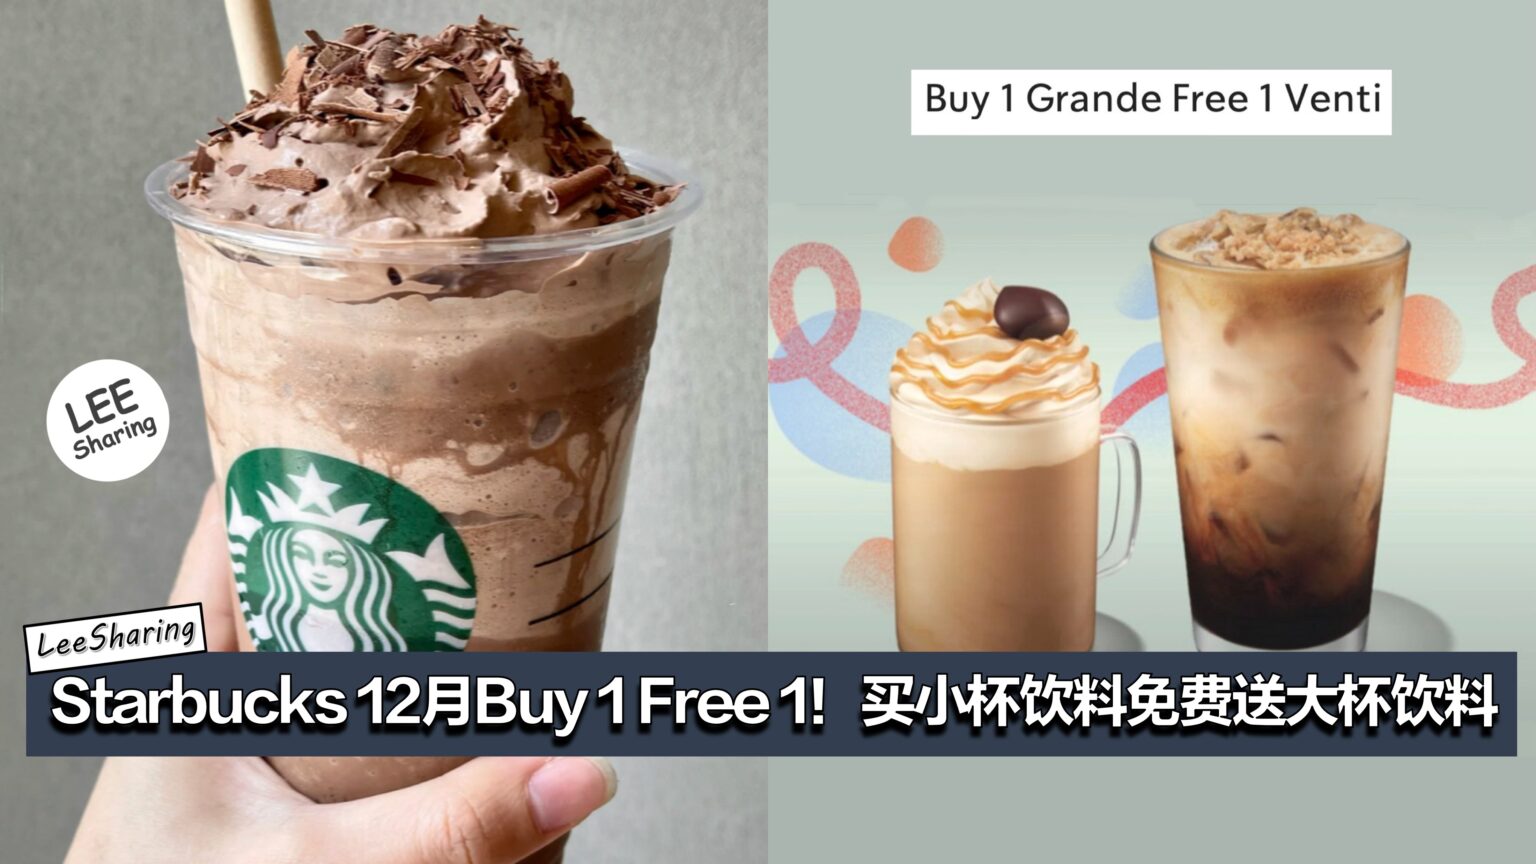 Starbucks 12月Buy 1 Free 1！买小杯饮料免费送大杯饮料！